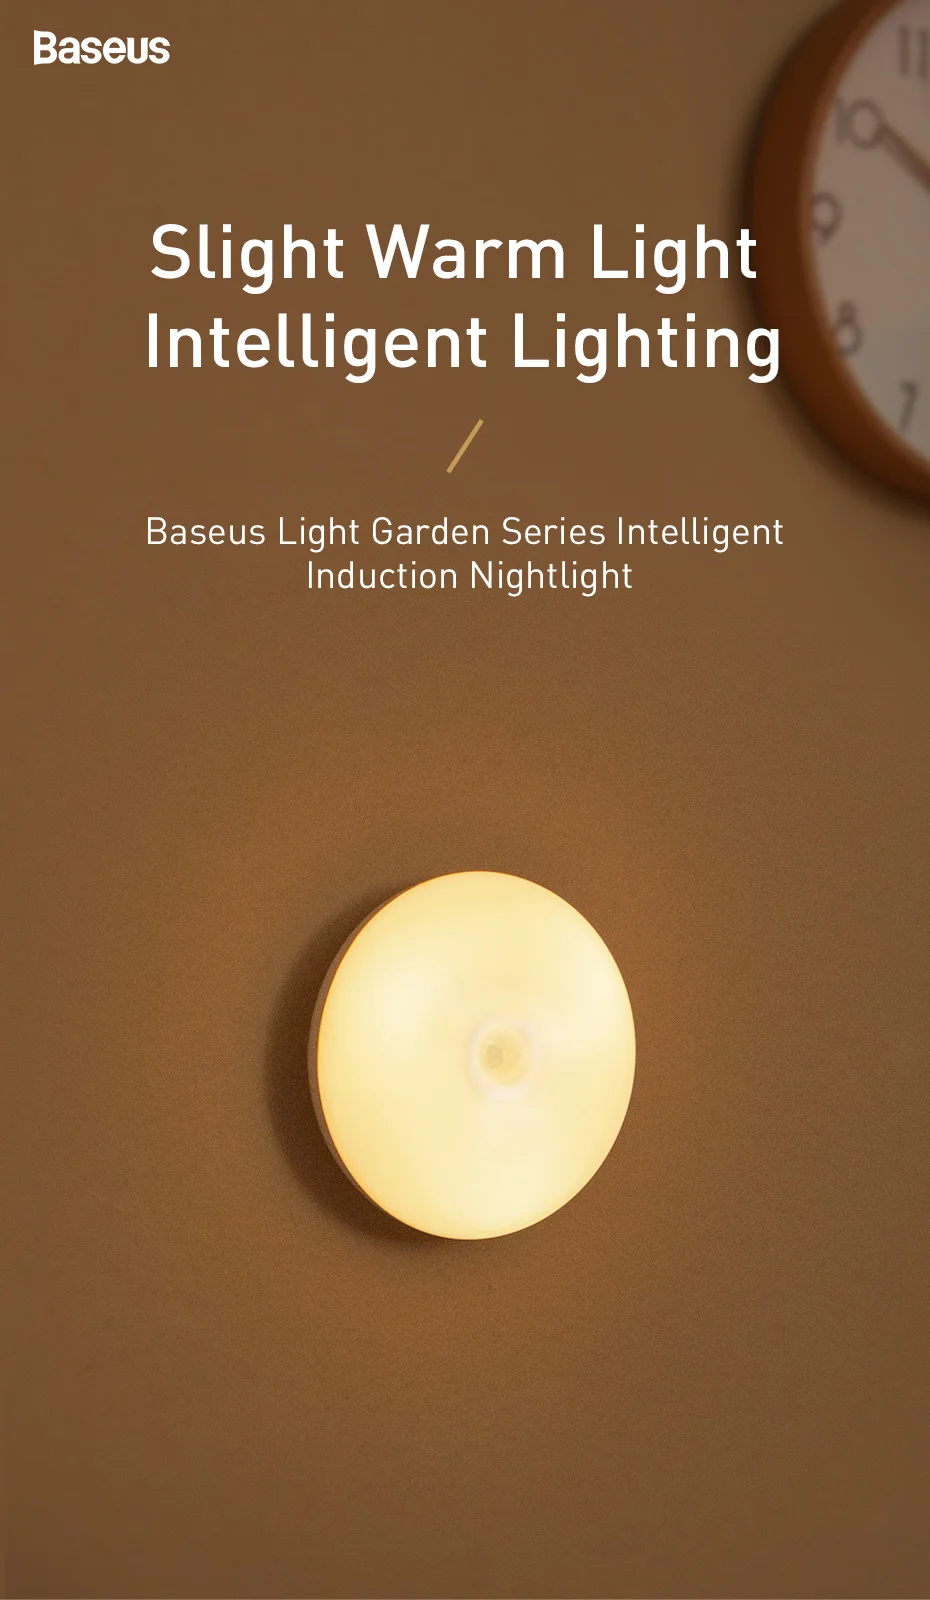 Baseus Light Garden Series Intelligent Induction Nightlight